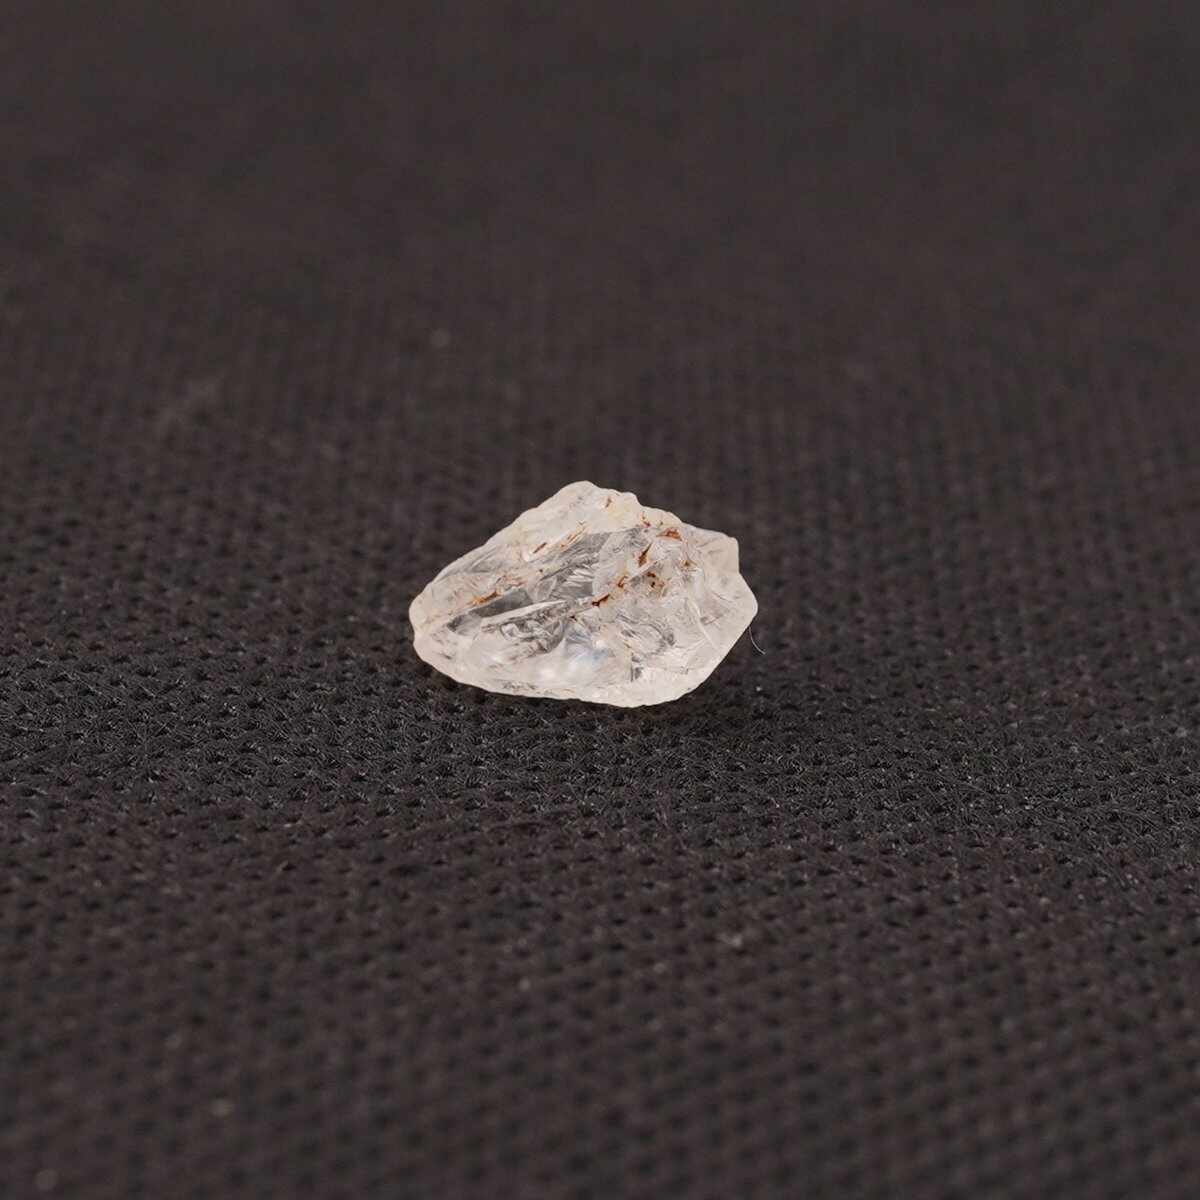 Fenacit nigerian cristal natural unicat f185